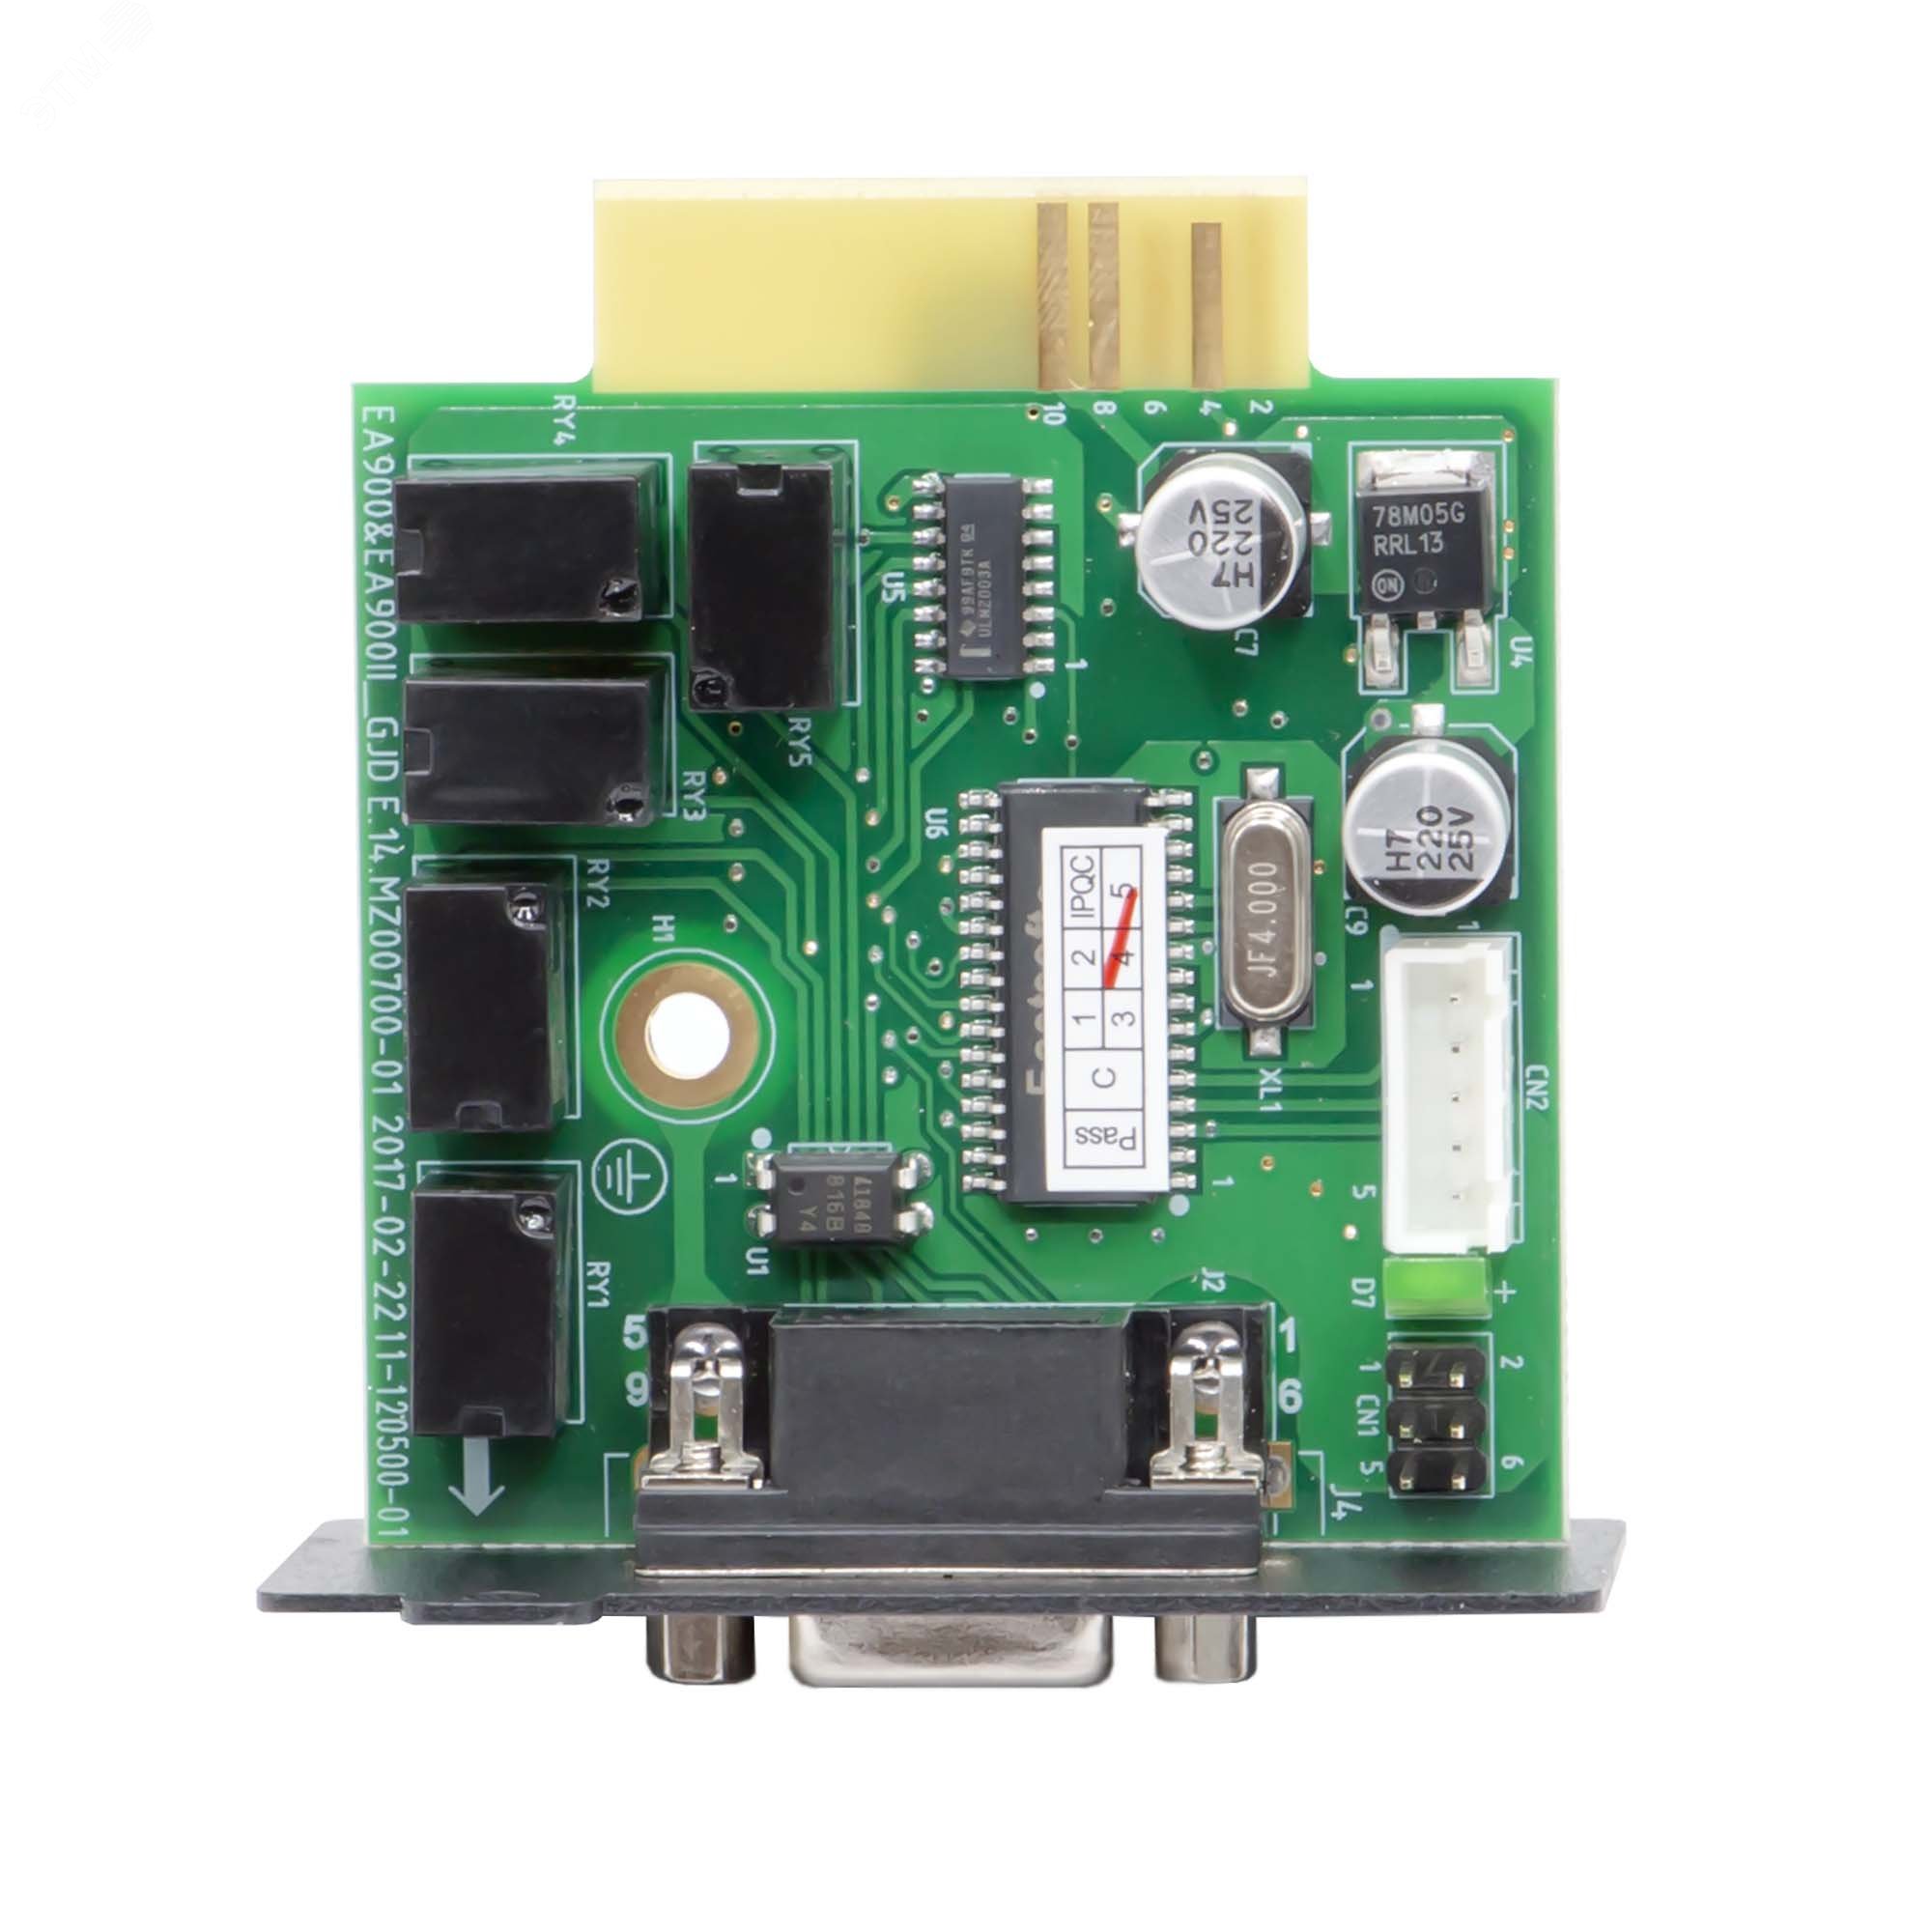 Адаптер AS400 ( сухие контакты ) для серии Info Rackmount Pro AS400INFO DKC - превью 3